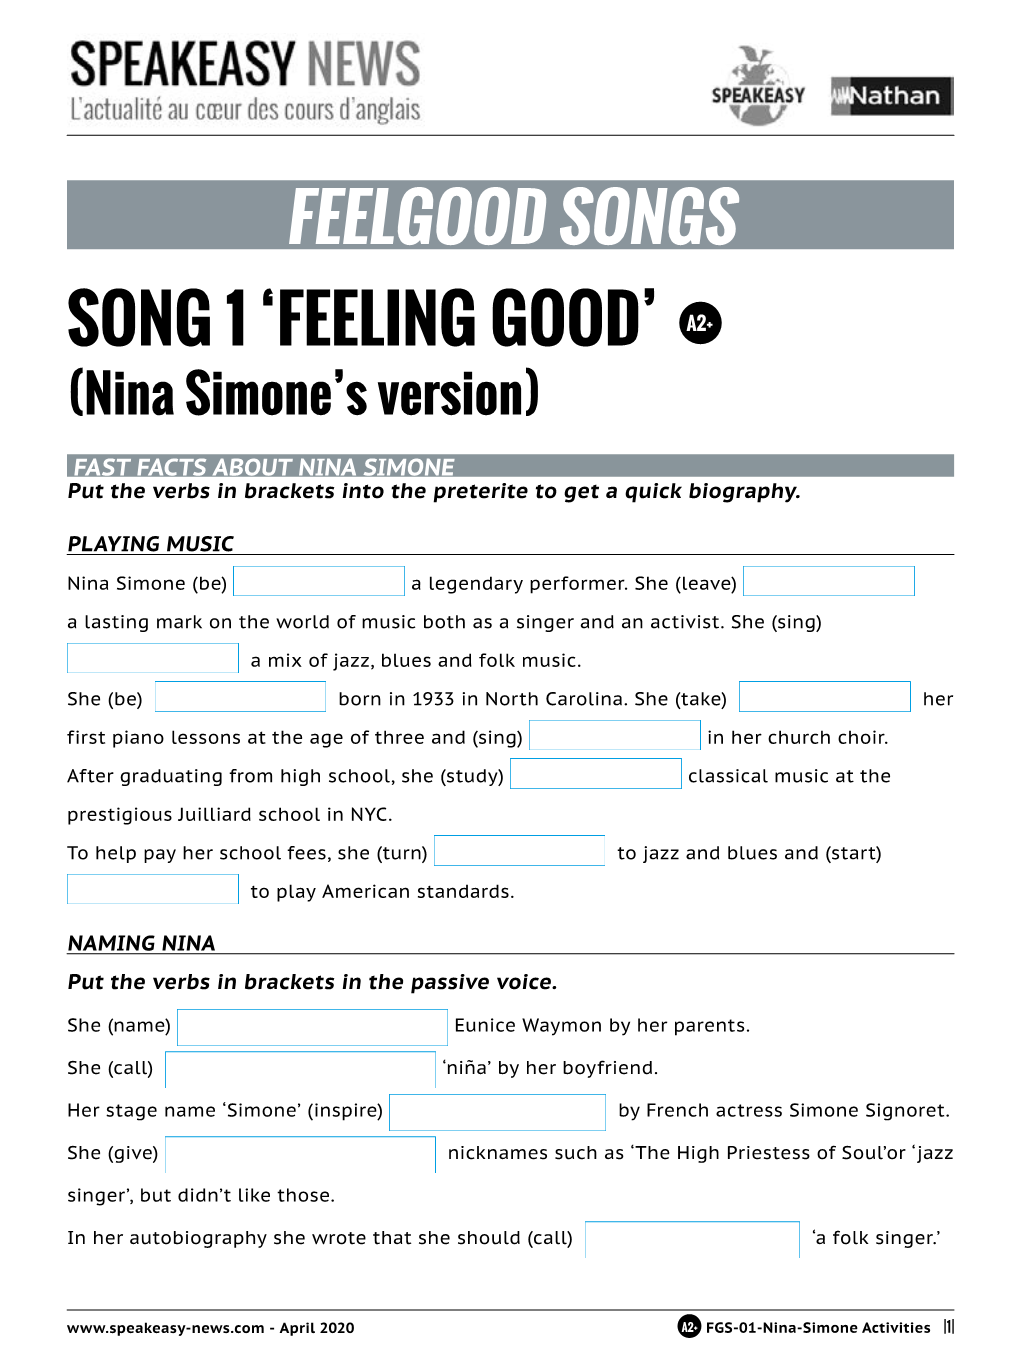 FEELING GOOD’ A2+ (Nina Simone’S Version)